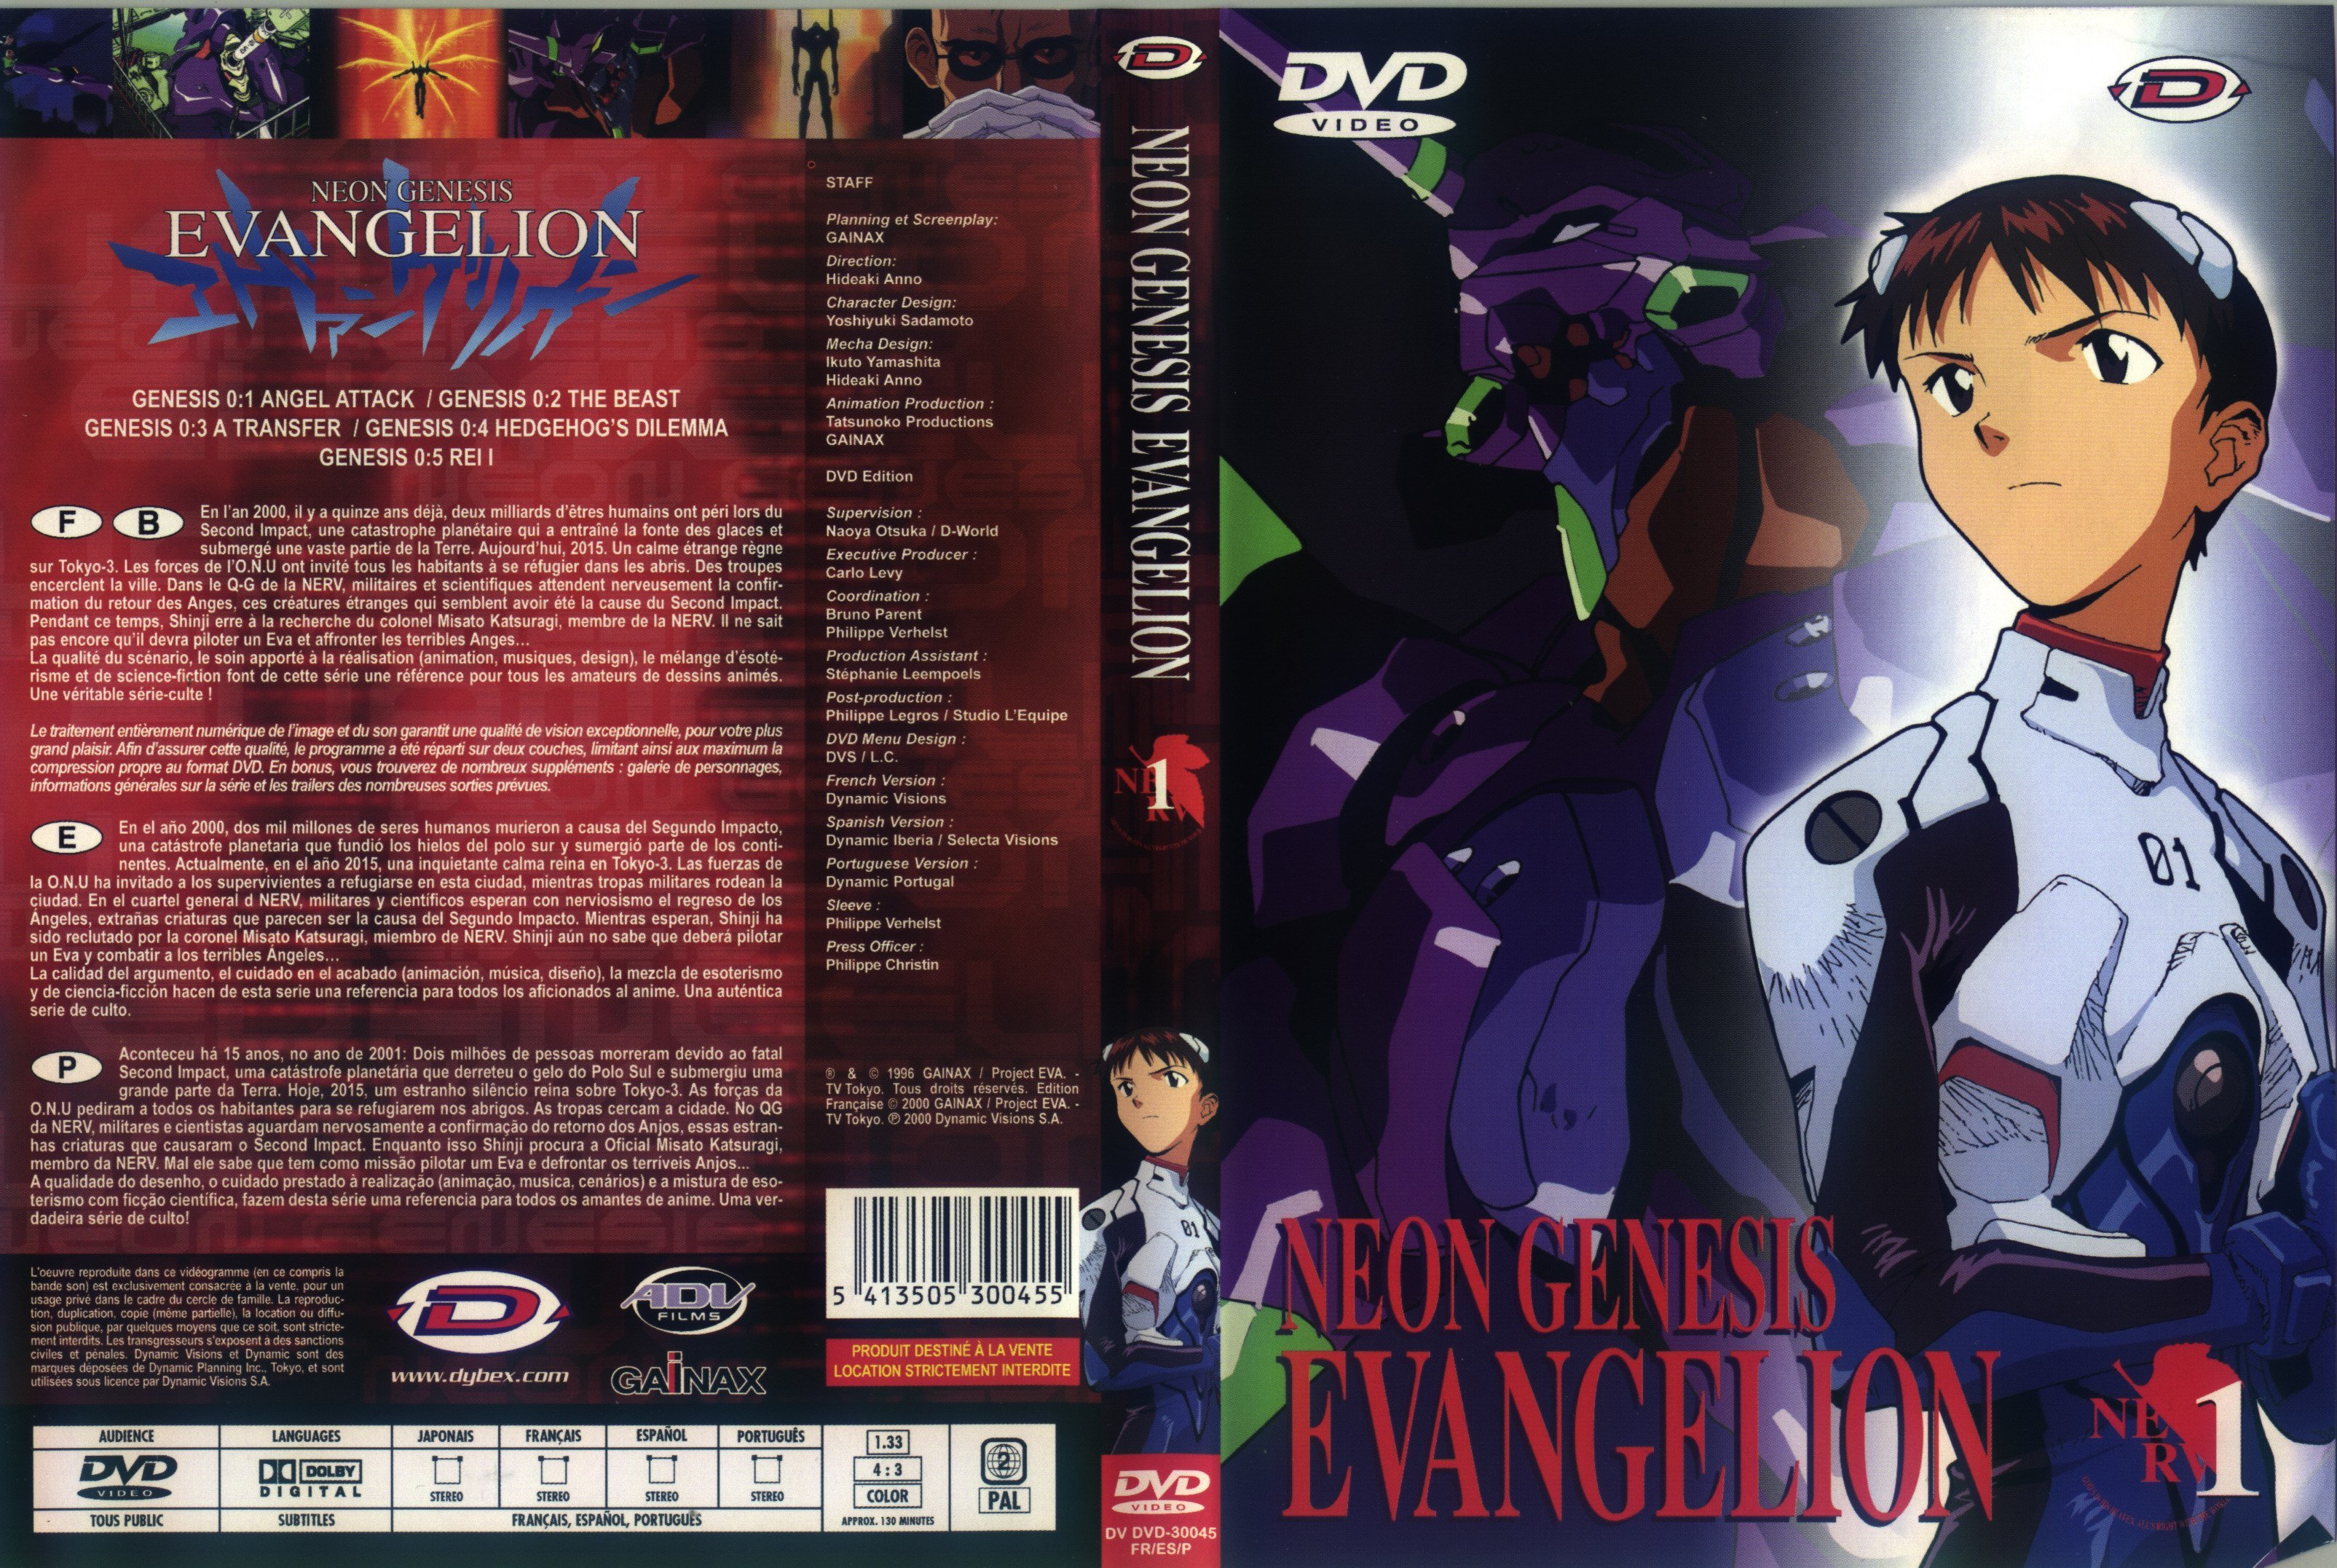 Jaquette DVD Neon genesis evangelion vol 1